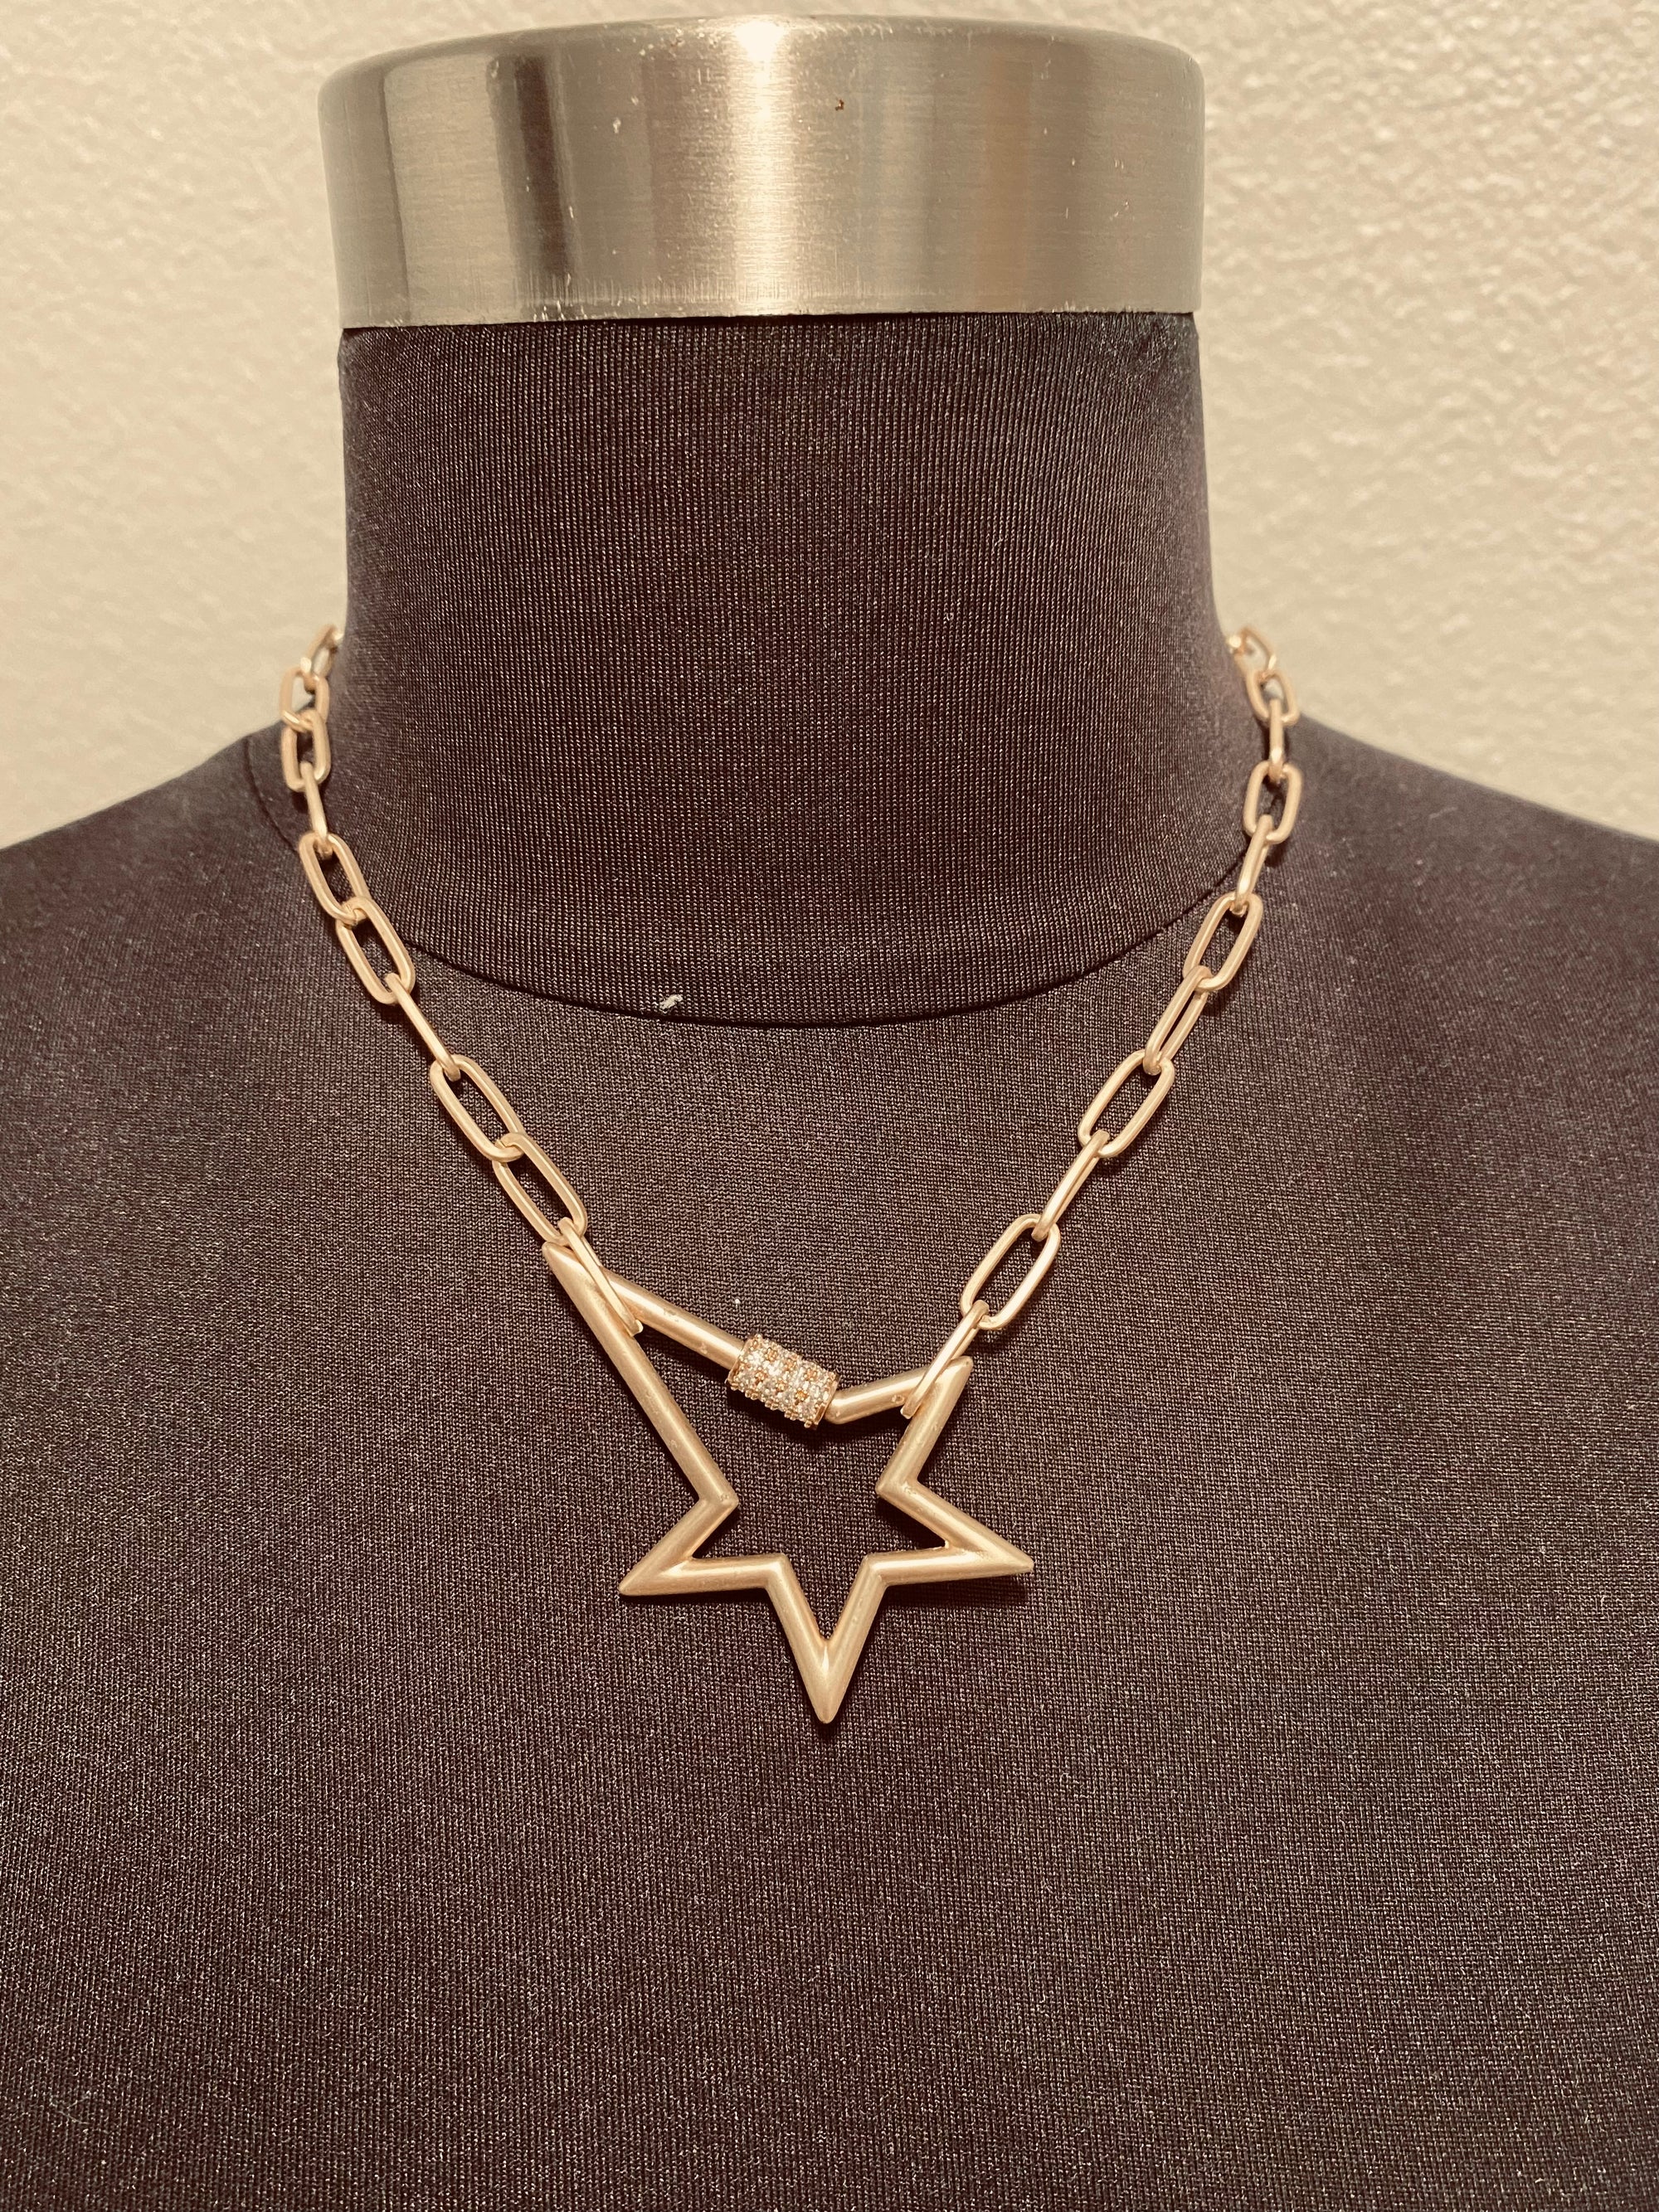 Asymmetrical Star Necklace